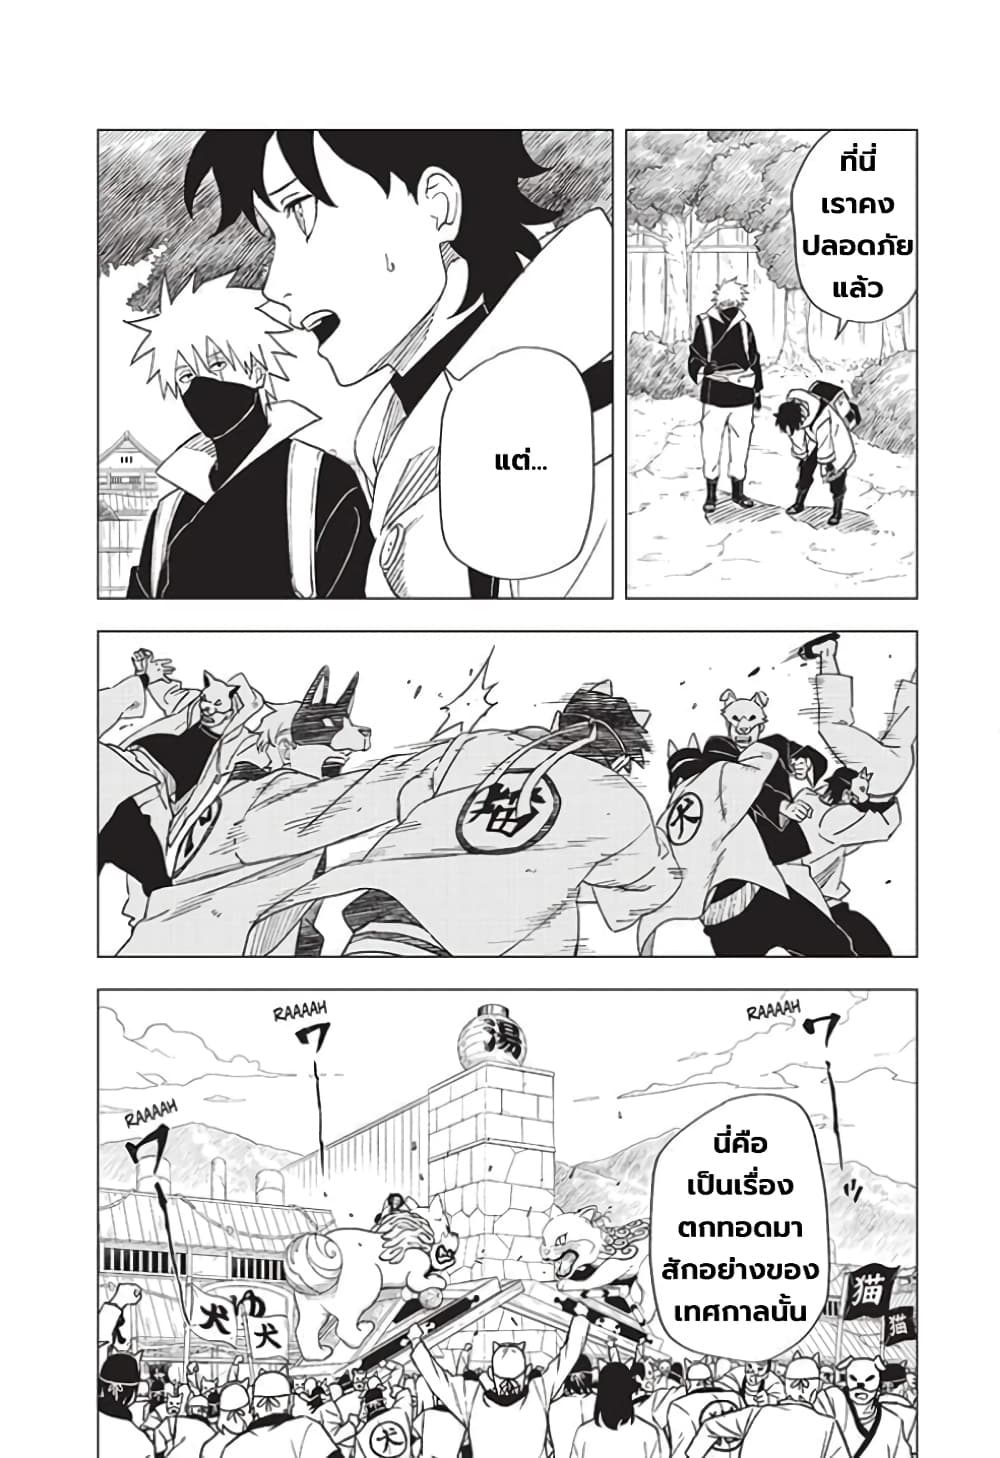 Naruto Konoha’s Story – The Steam Ninja Scrolls The Manga ตอนที่ 5 (11)